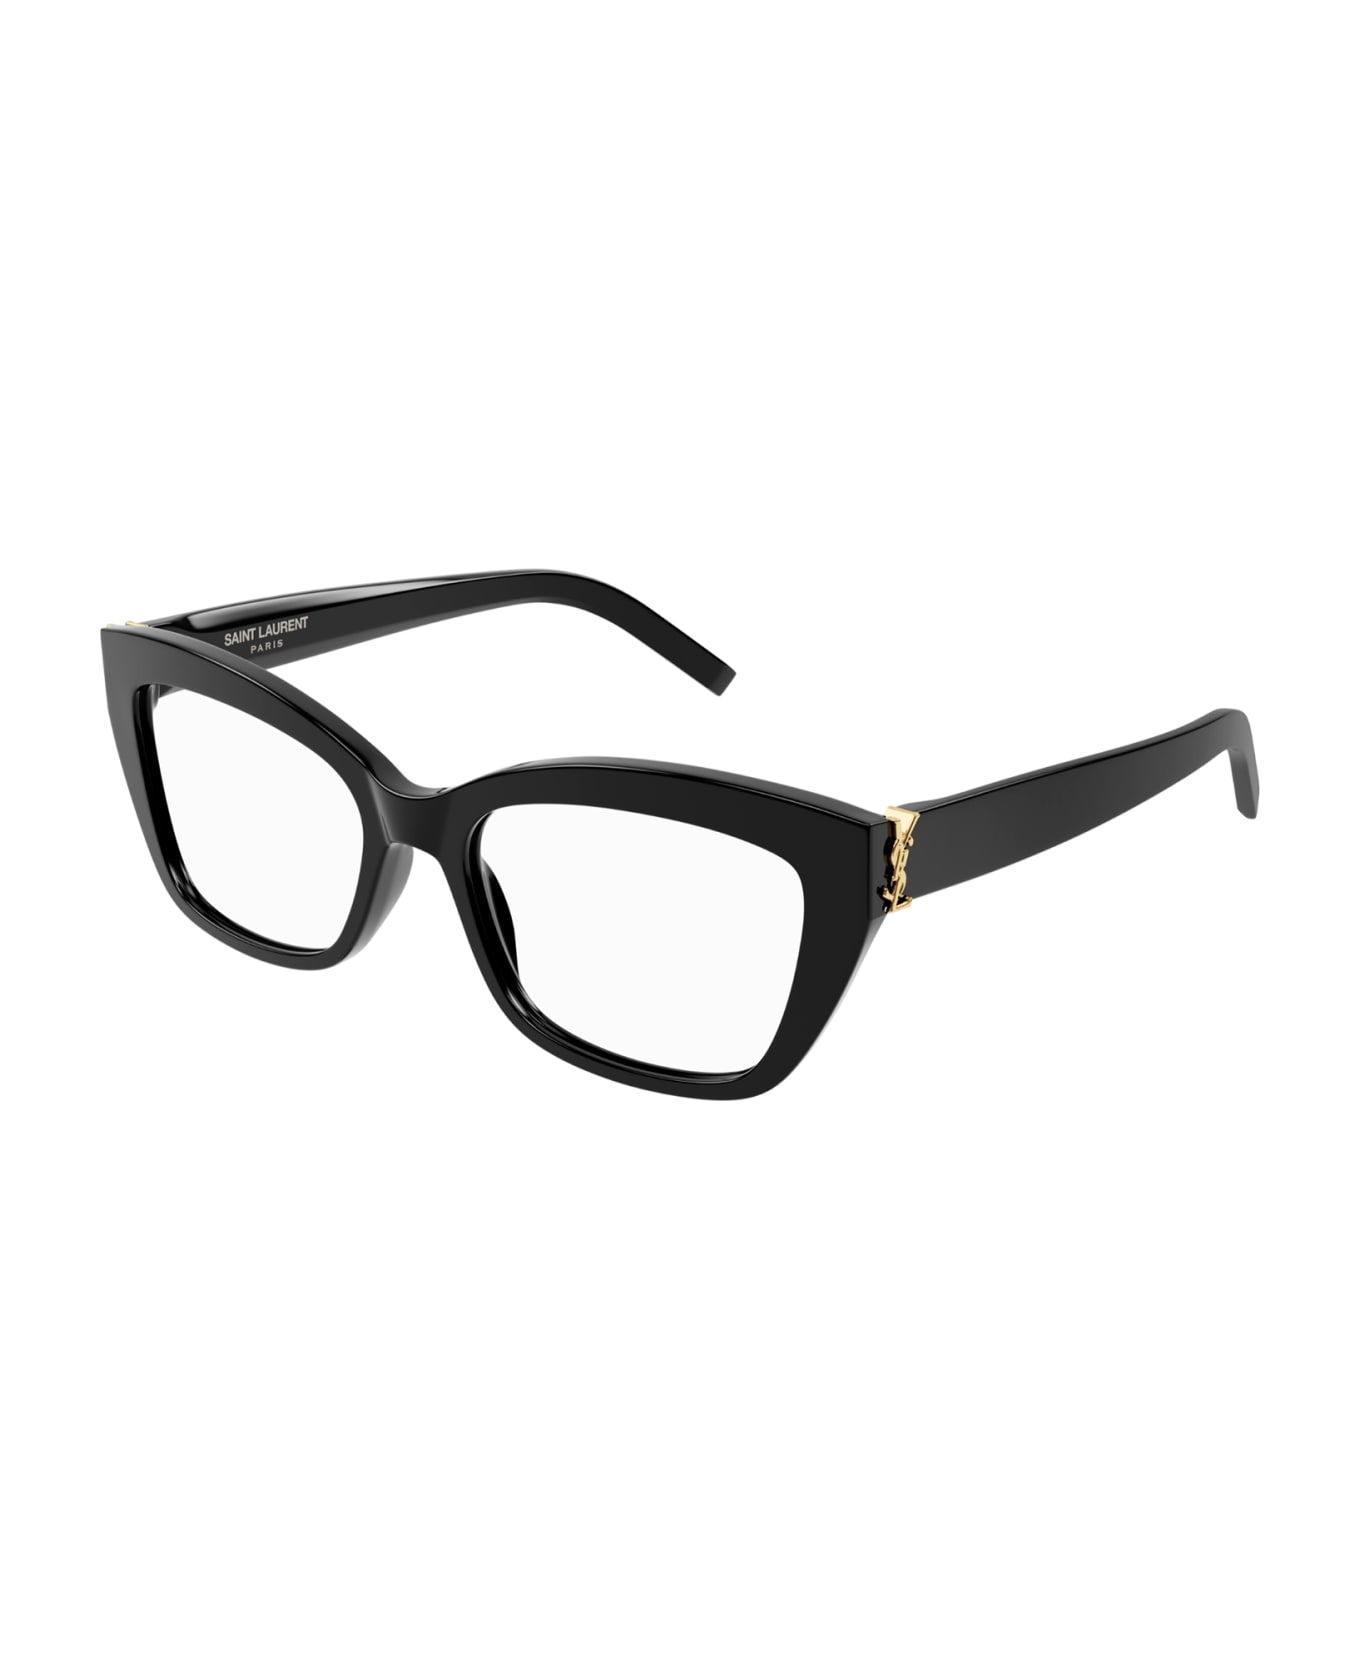 Saint Laurent Eyewear SL M117 Eyewear - Black Black Transpare